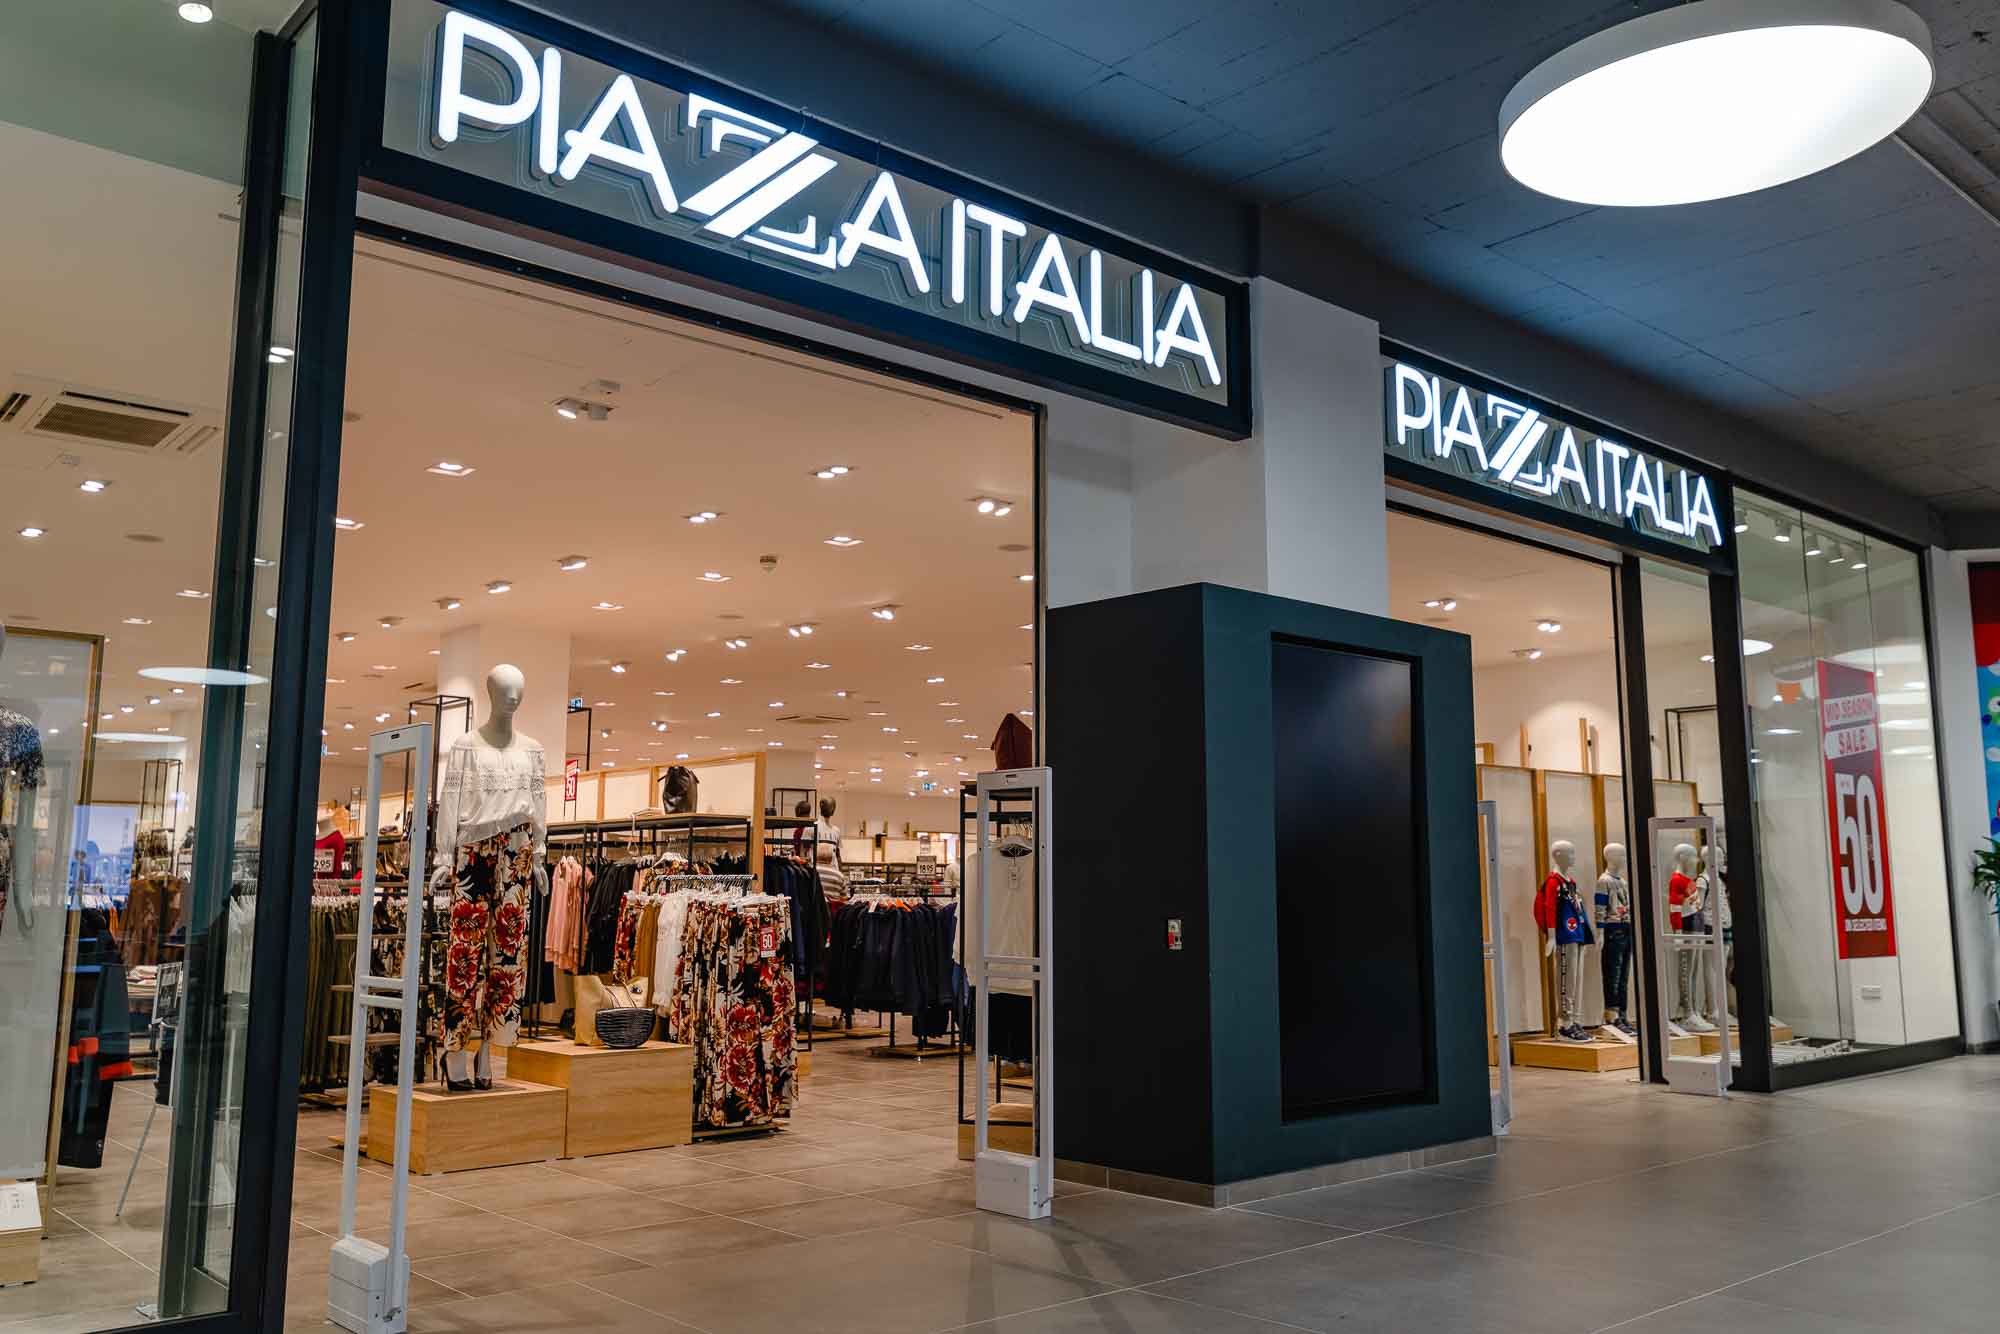 PIAZZA ITALIA Malta - Be the trend! Check out the latest